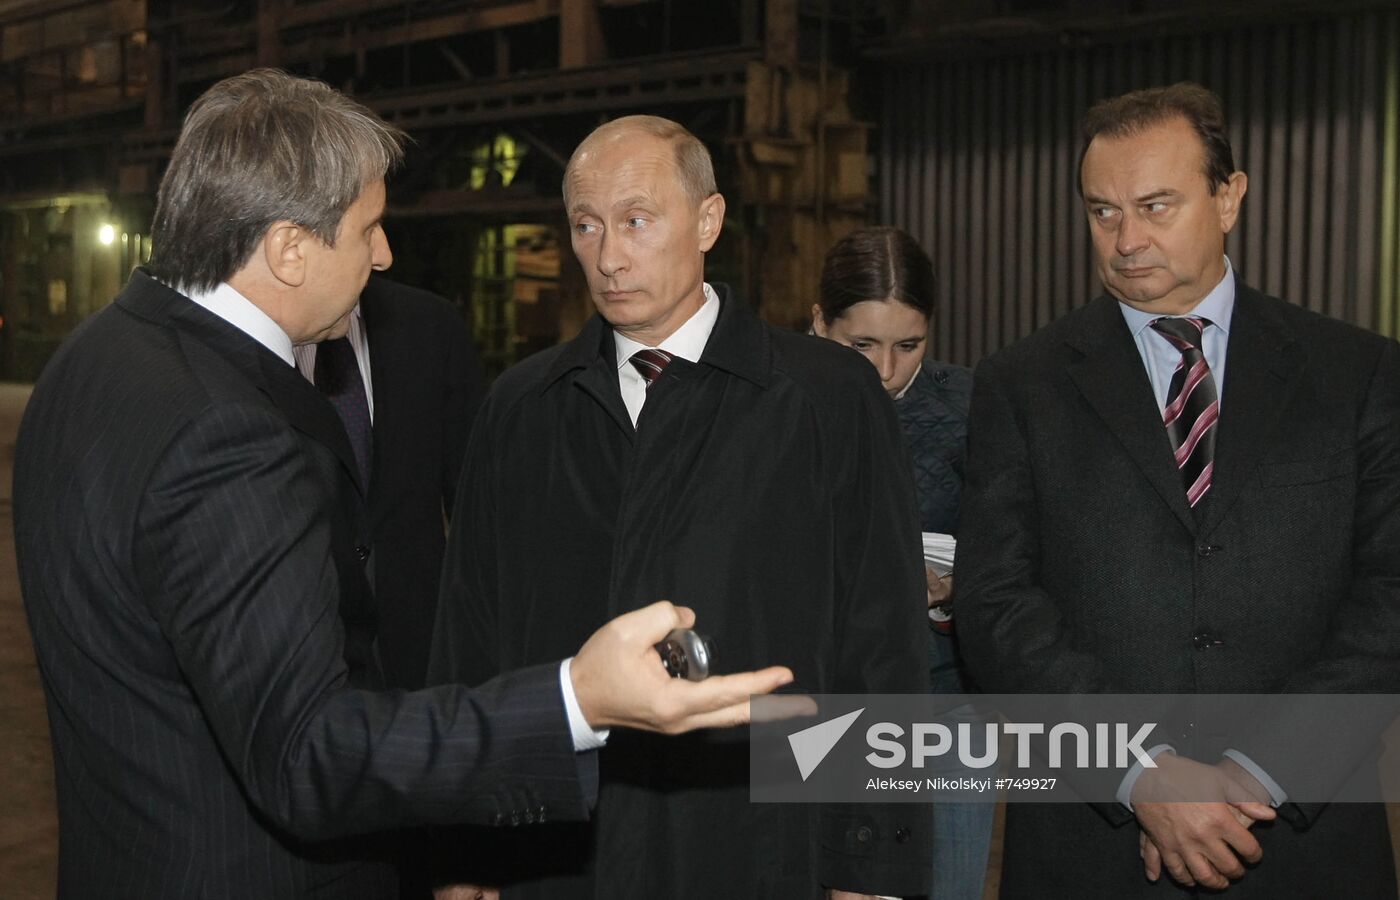 Vladimir Putin on working trip to Krasnoyarsk Territory